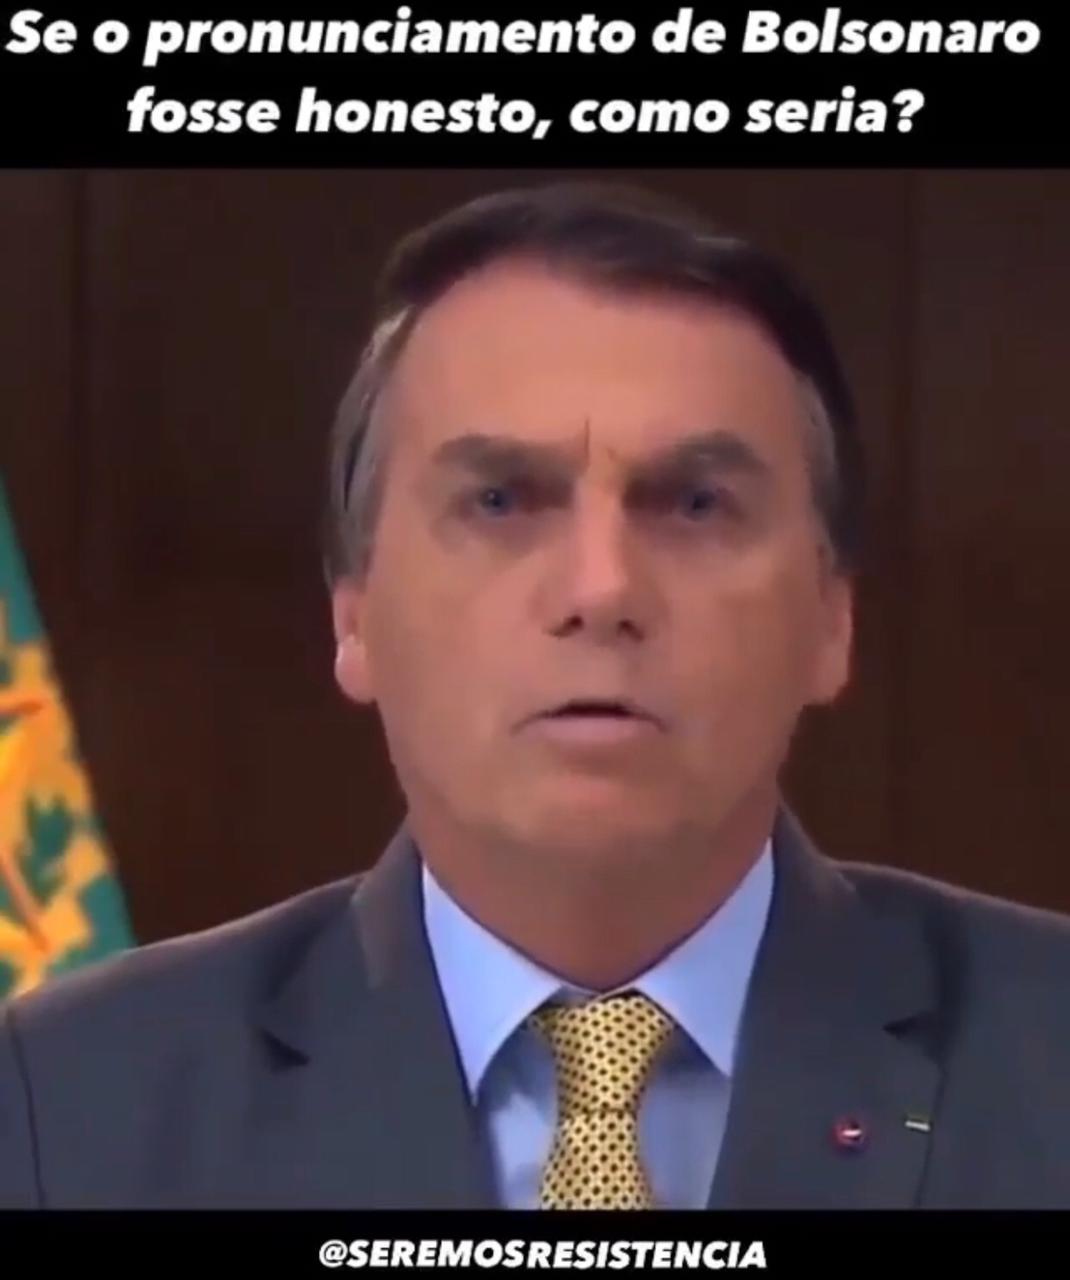 Chega. Fora Bolsonaro!